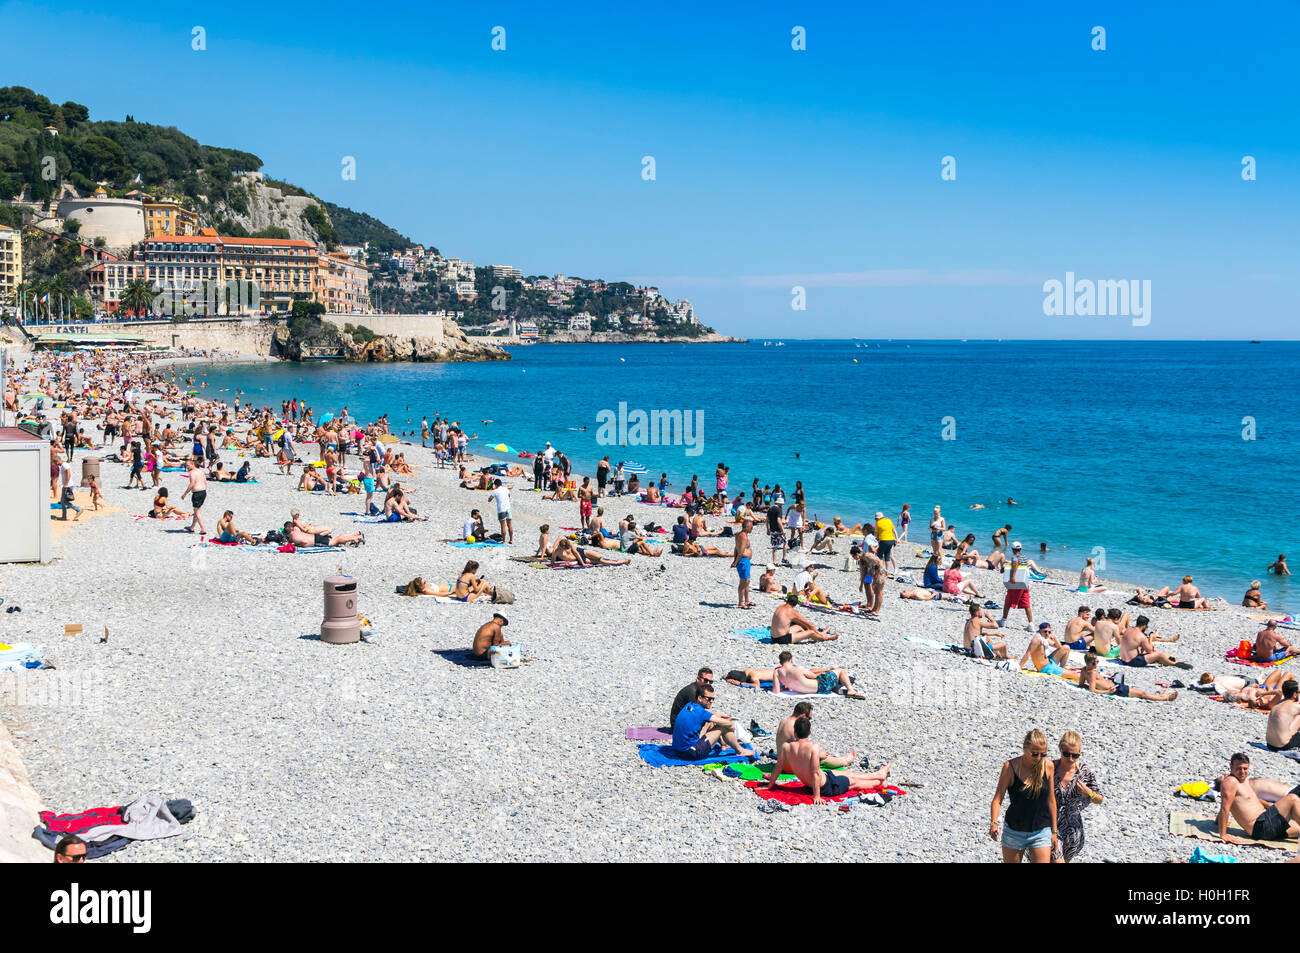 Municipal beach near Promenade des Anglais in City of Nice, Cote D'azur, Mediterranean sea, France Stock Photo